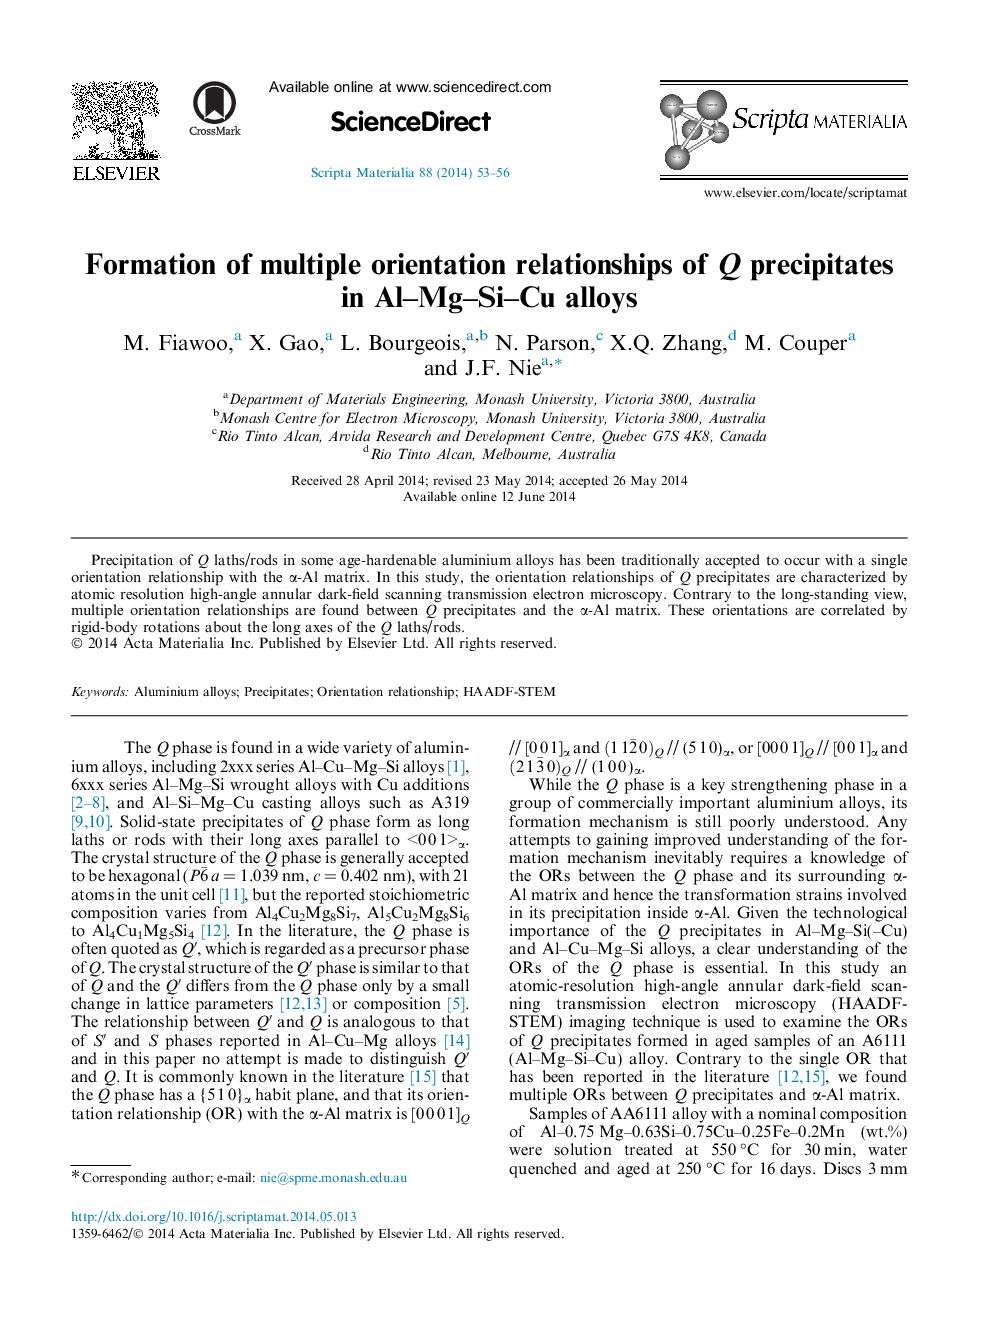 Formation of multiple orientation relationships of Q precipitates in Al–Mg–Si–Cu alloys